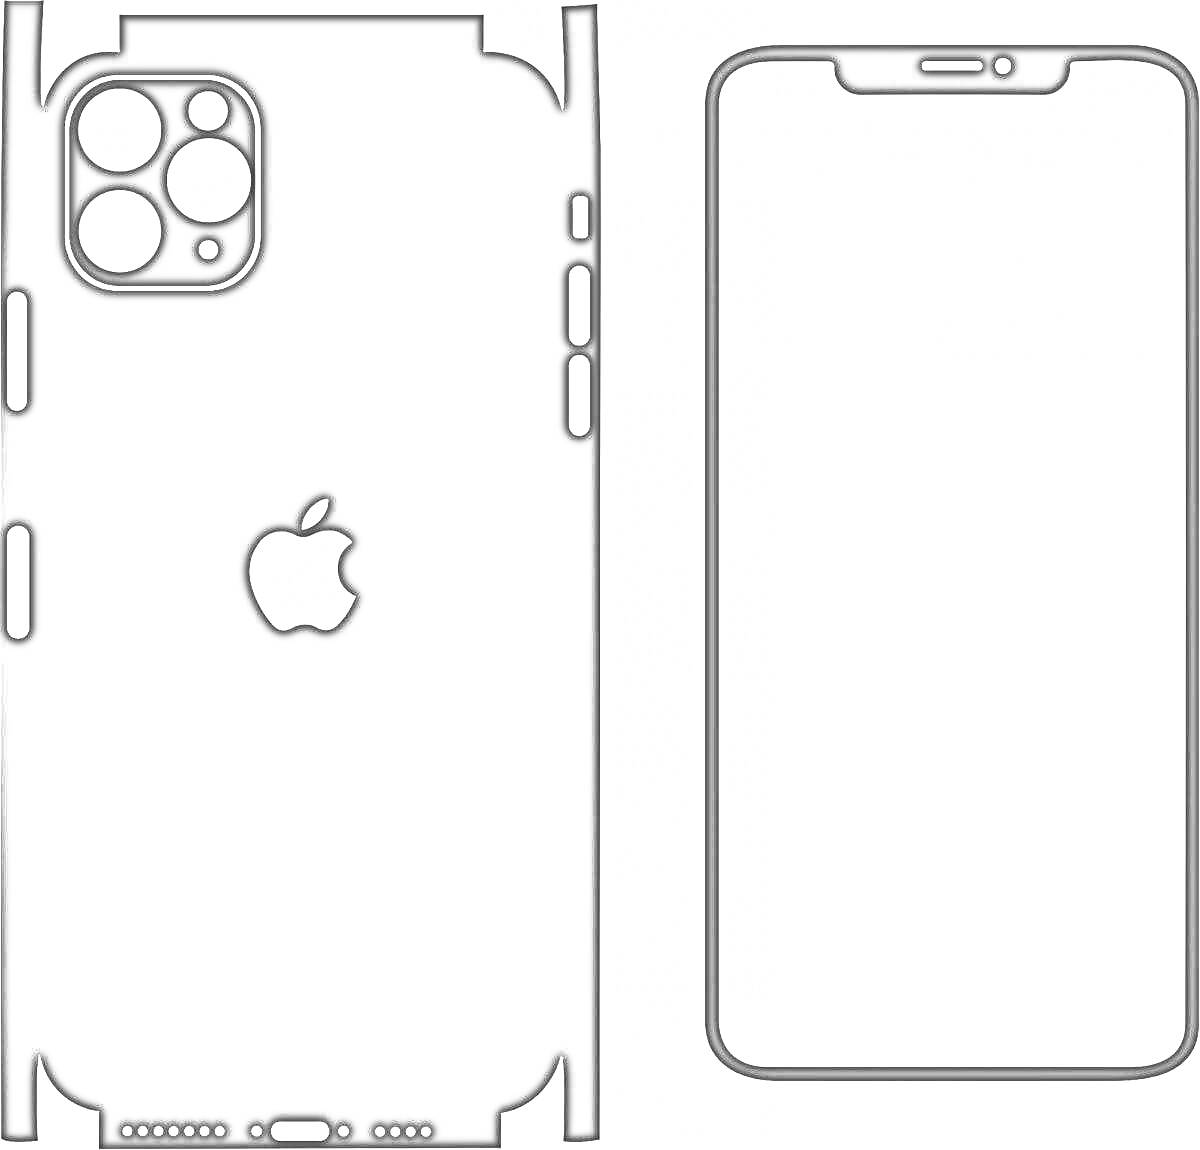 Раскраска Черно-белая раскраска iPhone 13 Pro Max с логотипом Apple и контурами камеры и экрана